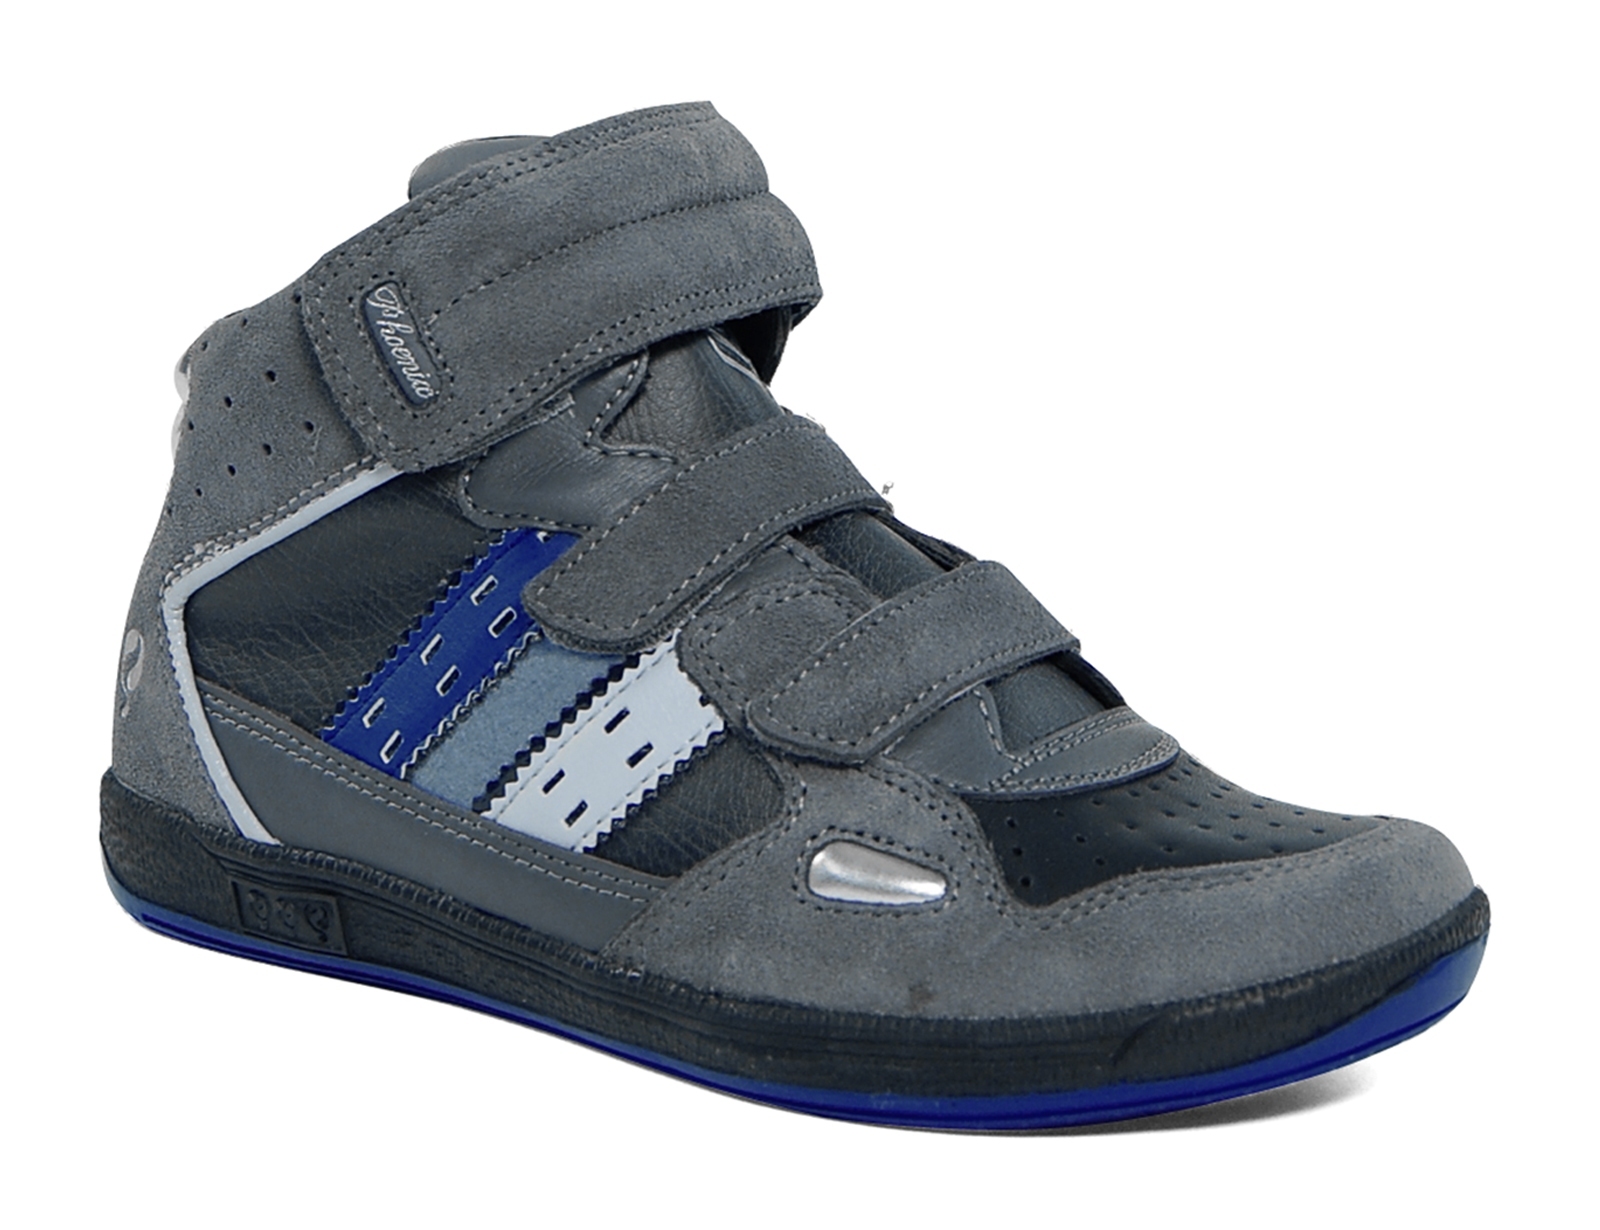 Avantisport - Quick - Phoenix Junior Velcro - Black/grey Seal/blue